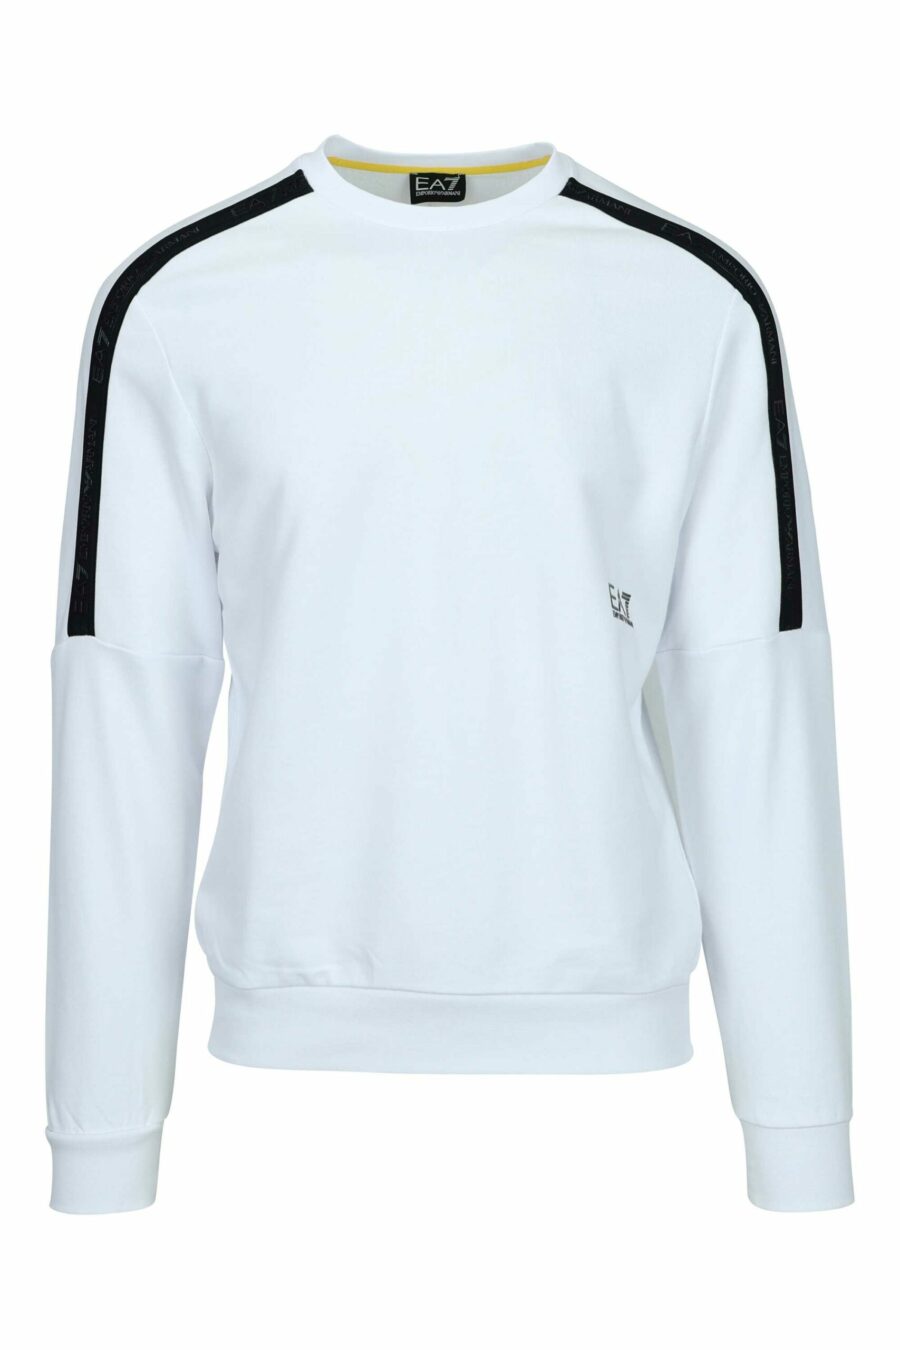 White sweatshirt with "lux identity" mini-logo on monochrome ribbon - 8058947443338 scaled